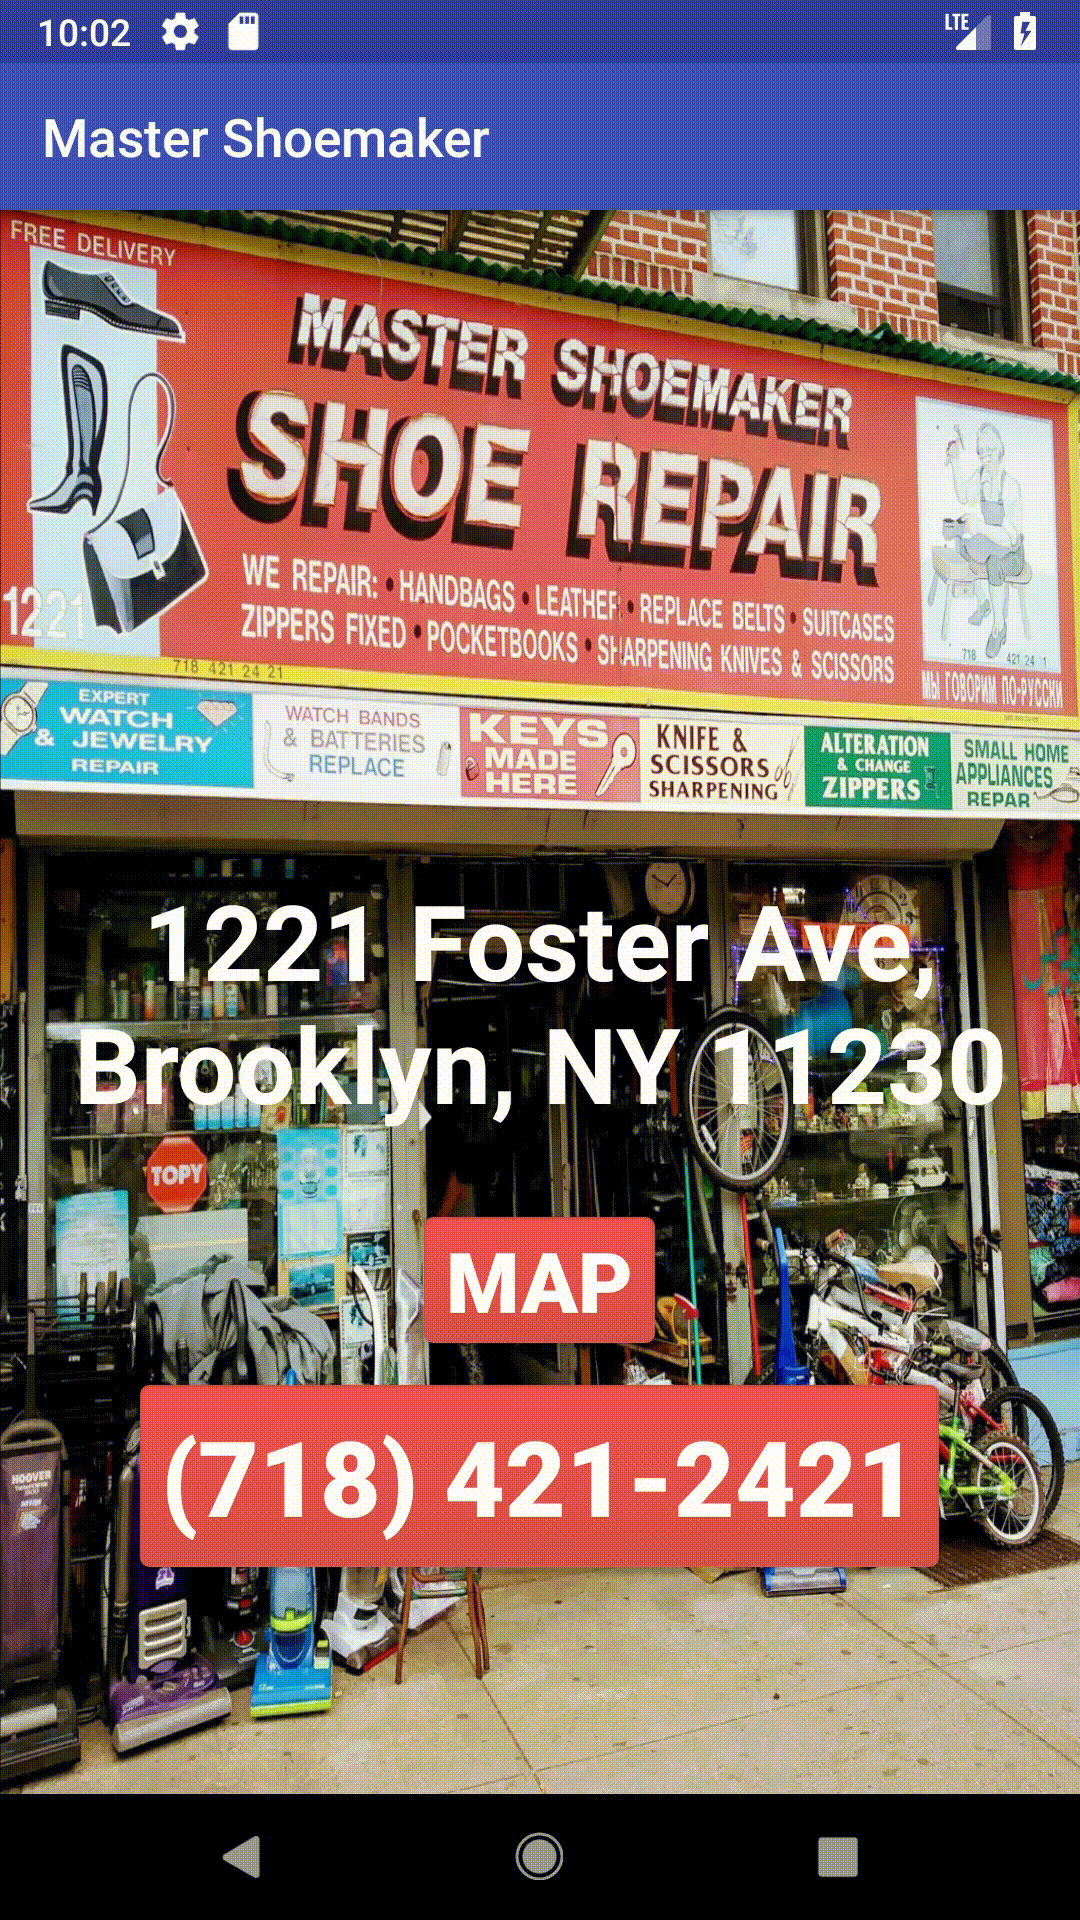 Master Shoemaker Business Card App